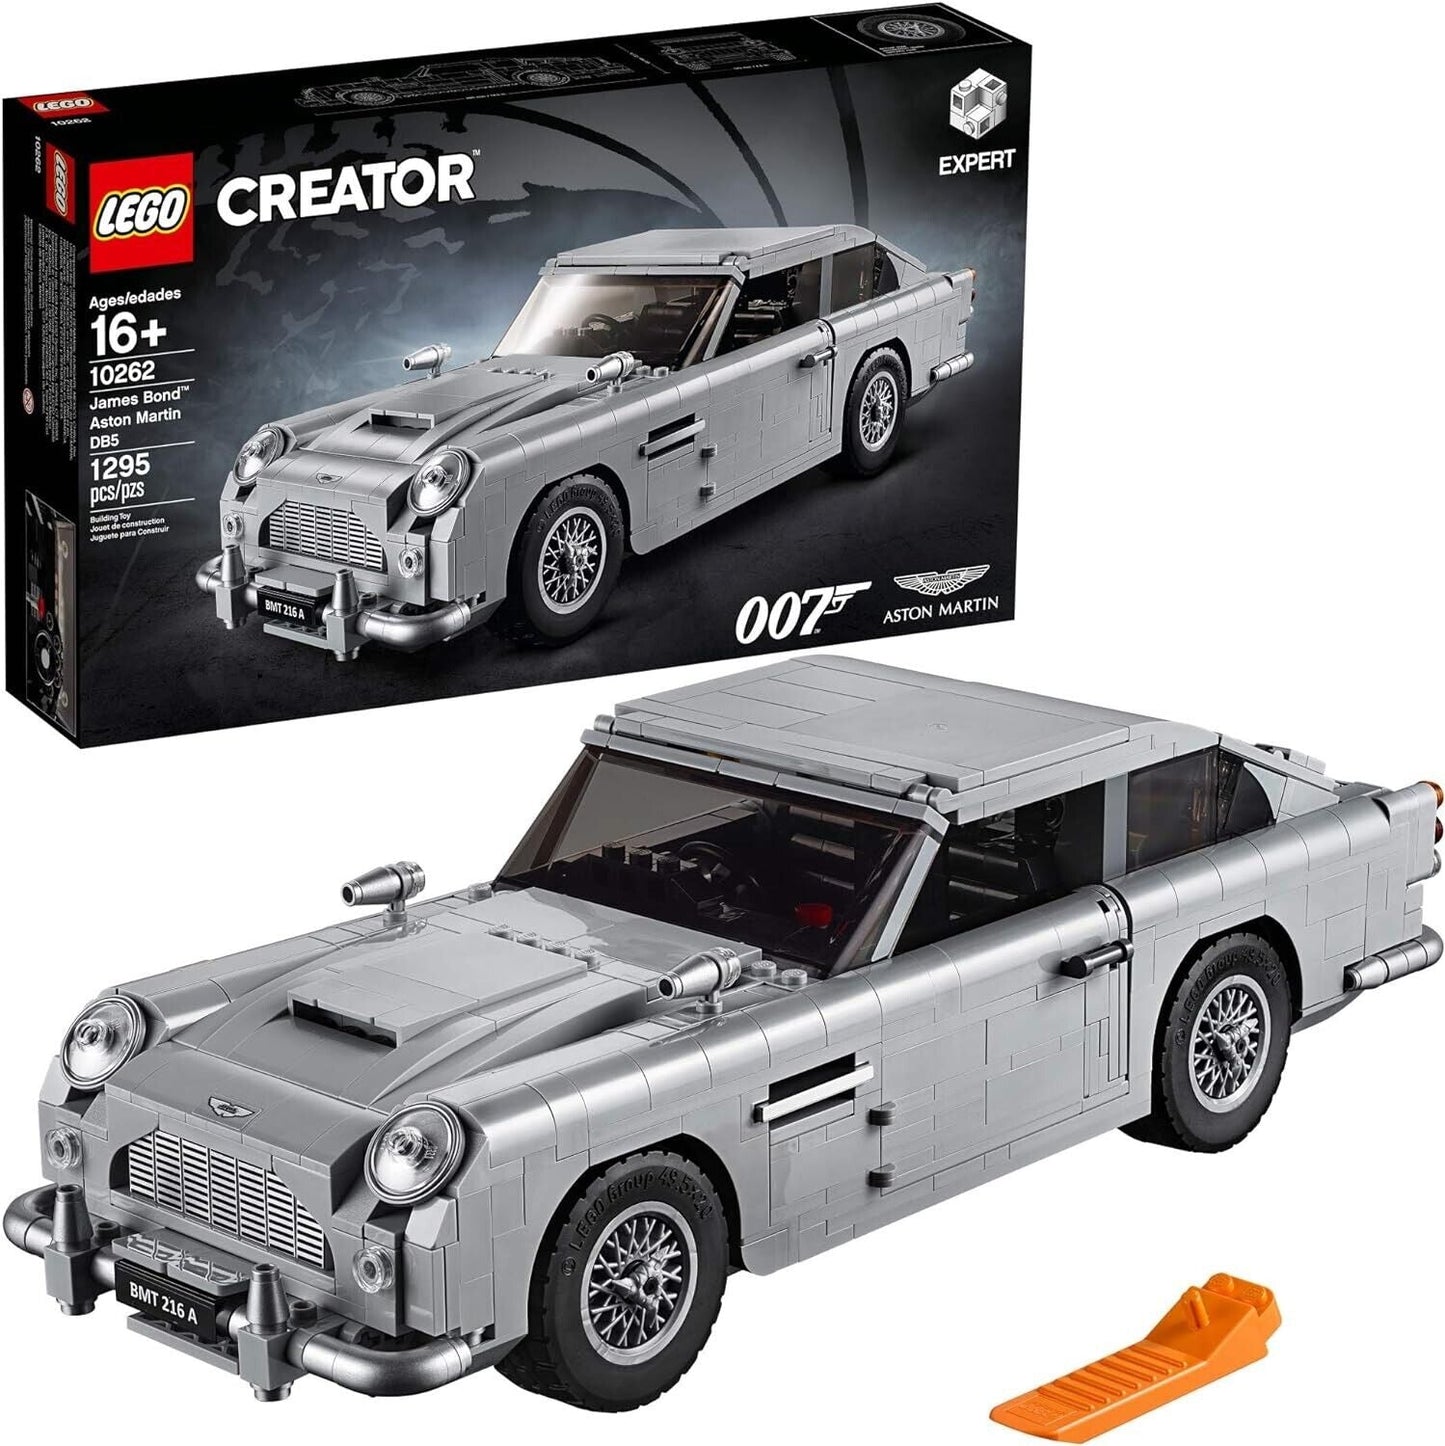 LEGO Creator Expert: James Bond Aston Martin DB5 (10262) Damaged Box